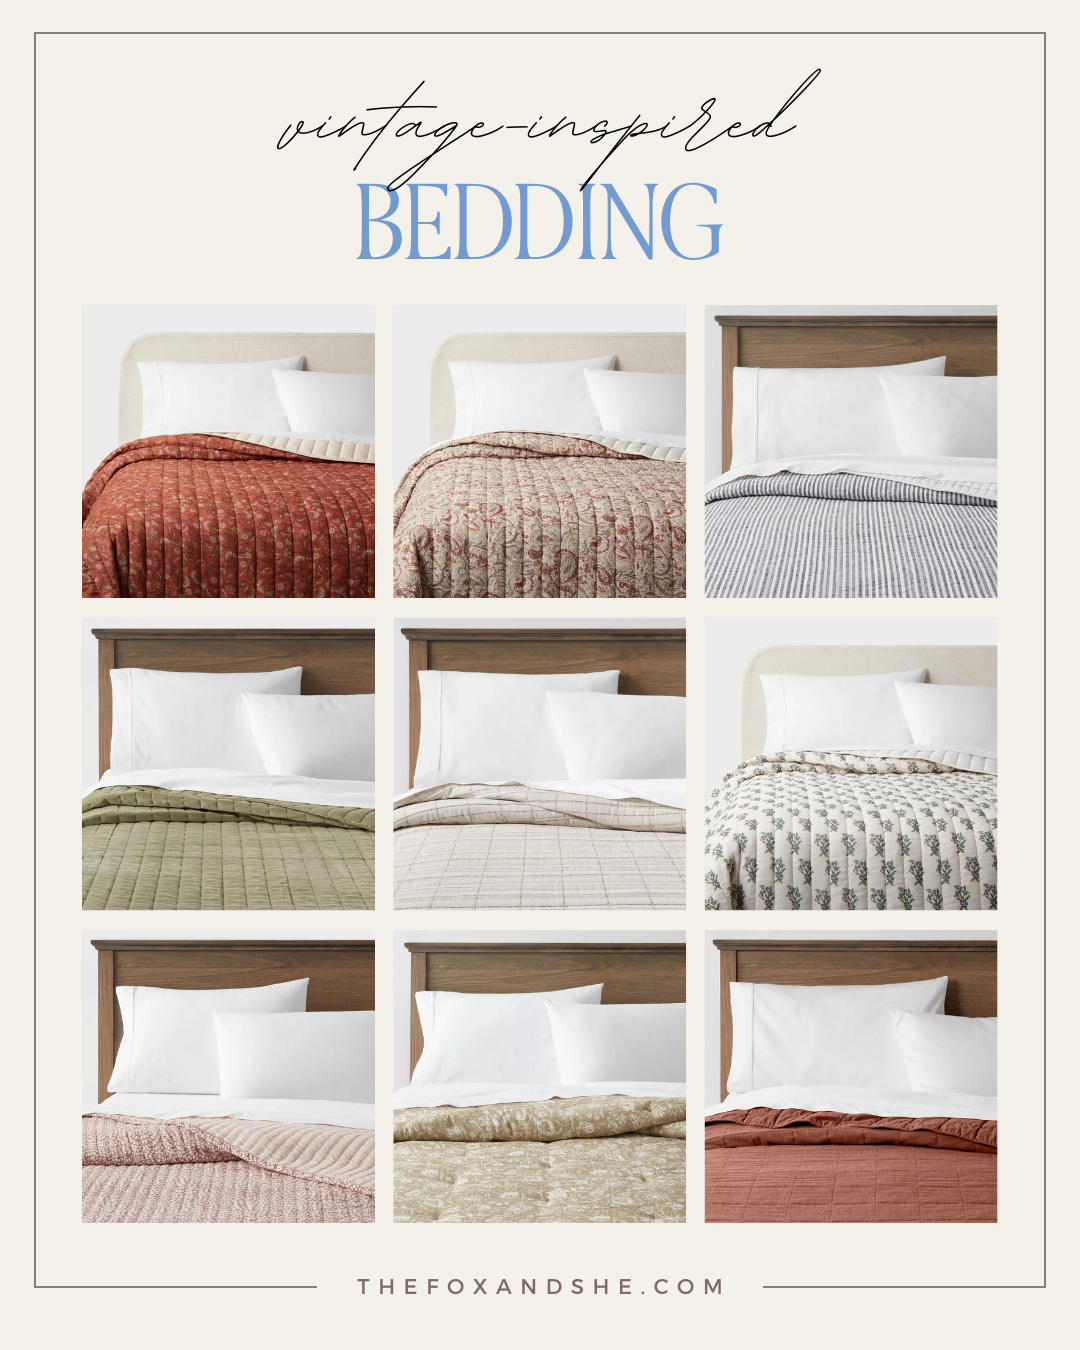 vintage-inspired bedding on a budget | thefoxandshe.com